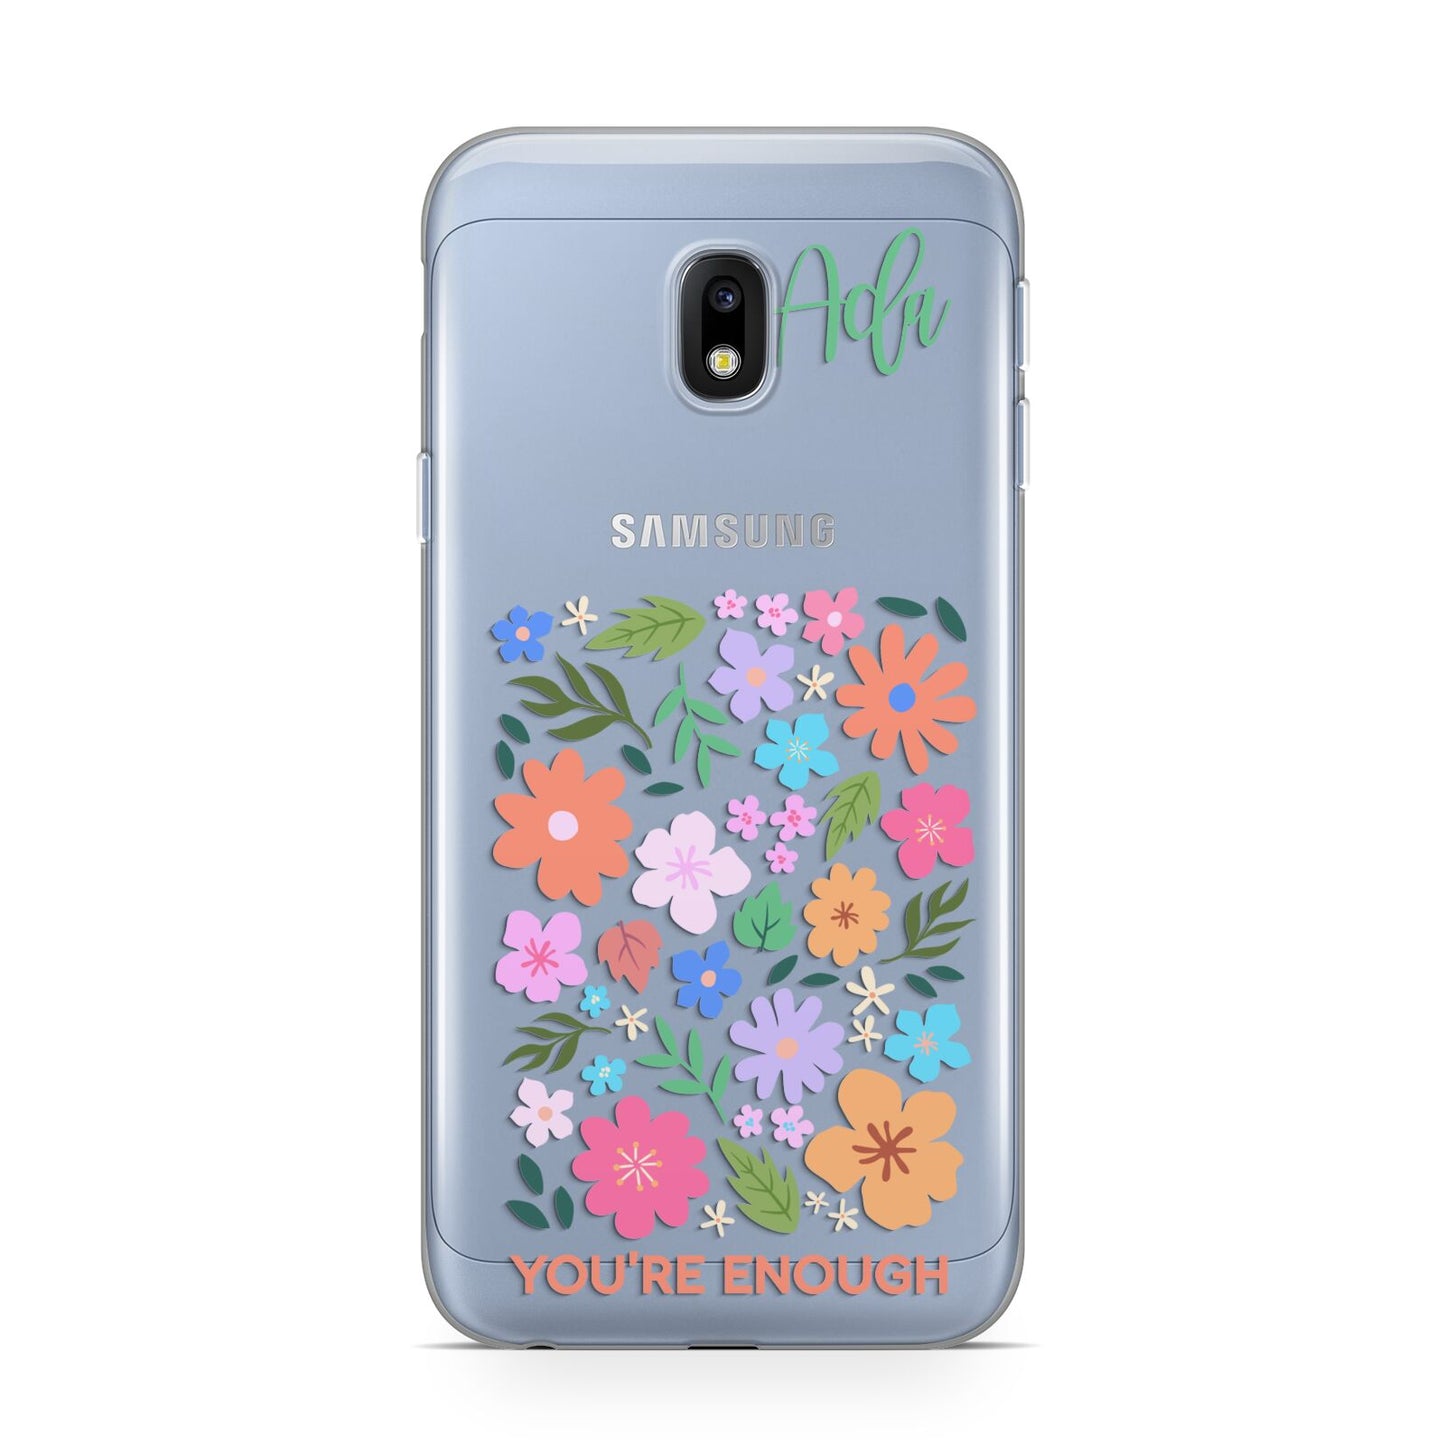 Floral Poster Samsung Galaxy J3 2017 Case